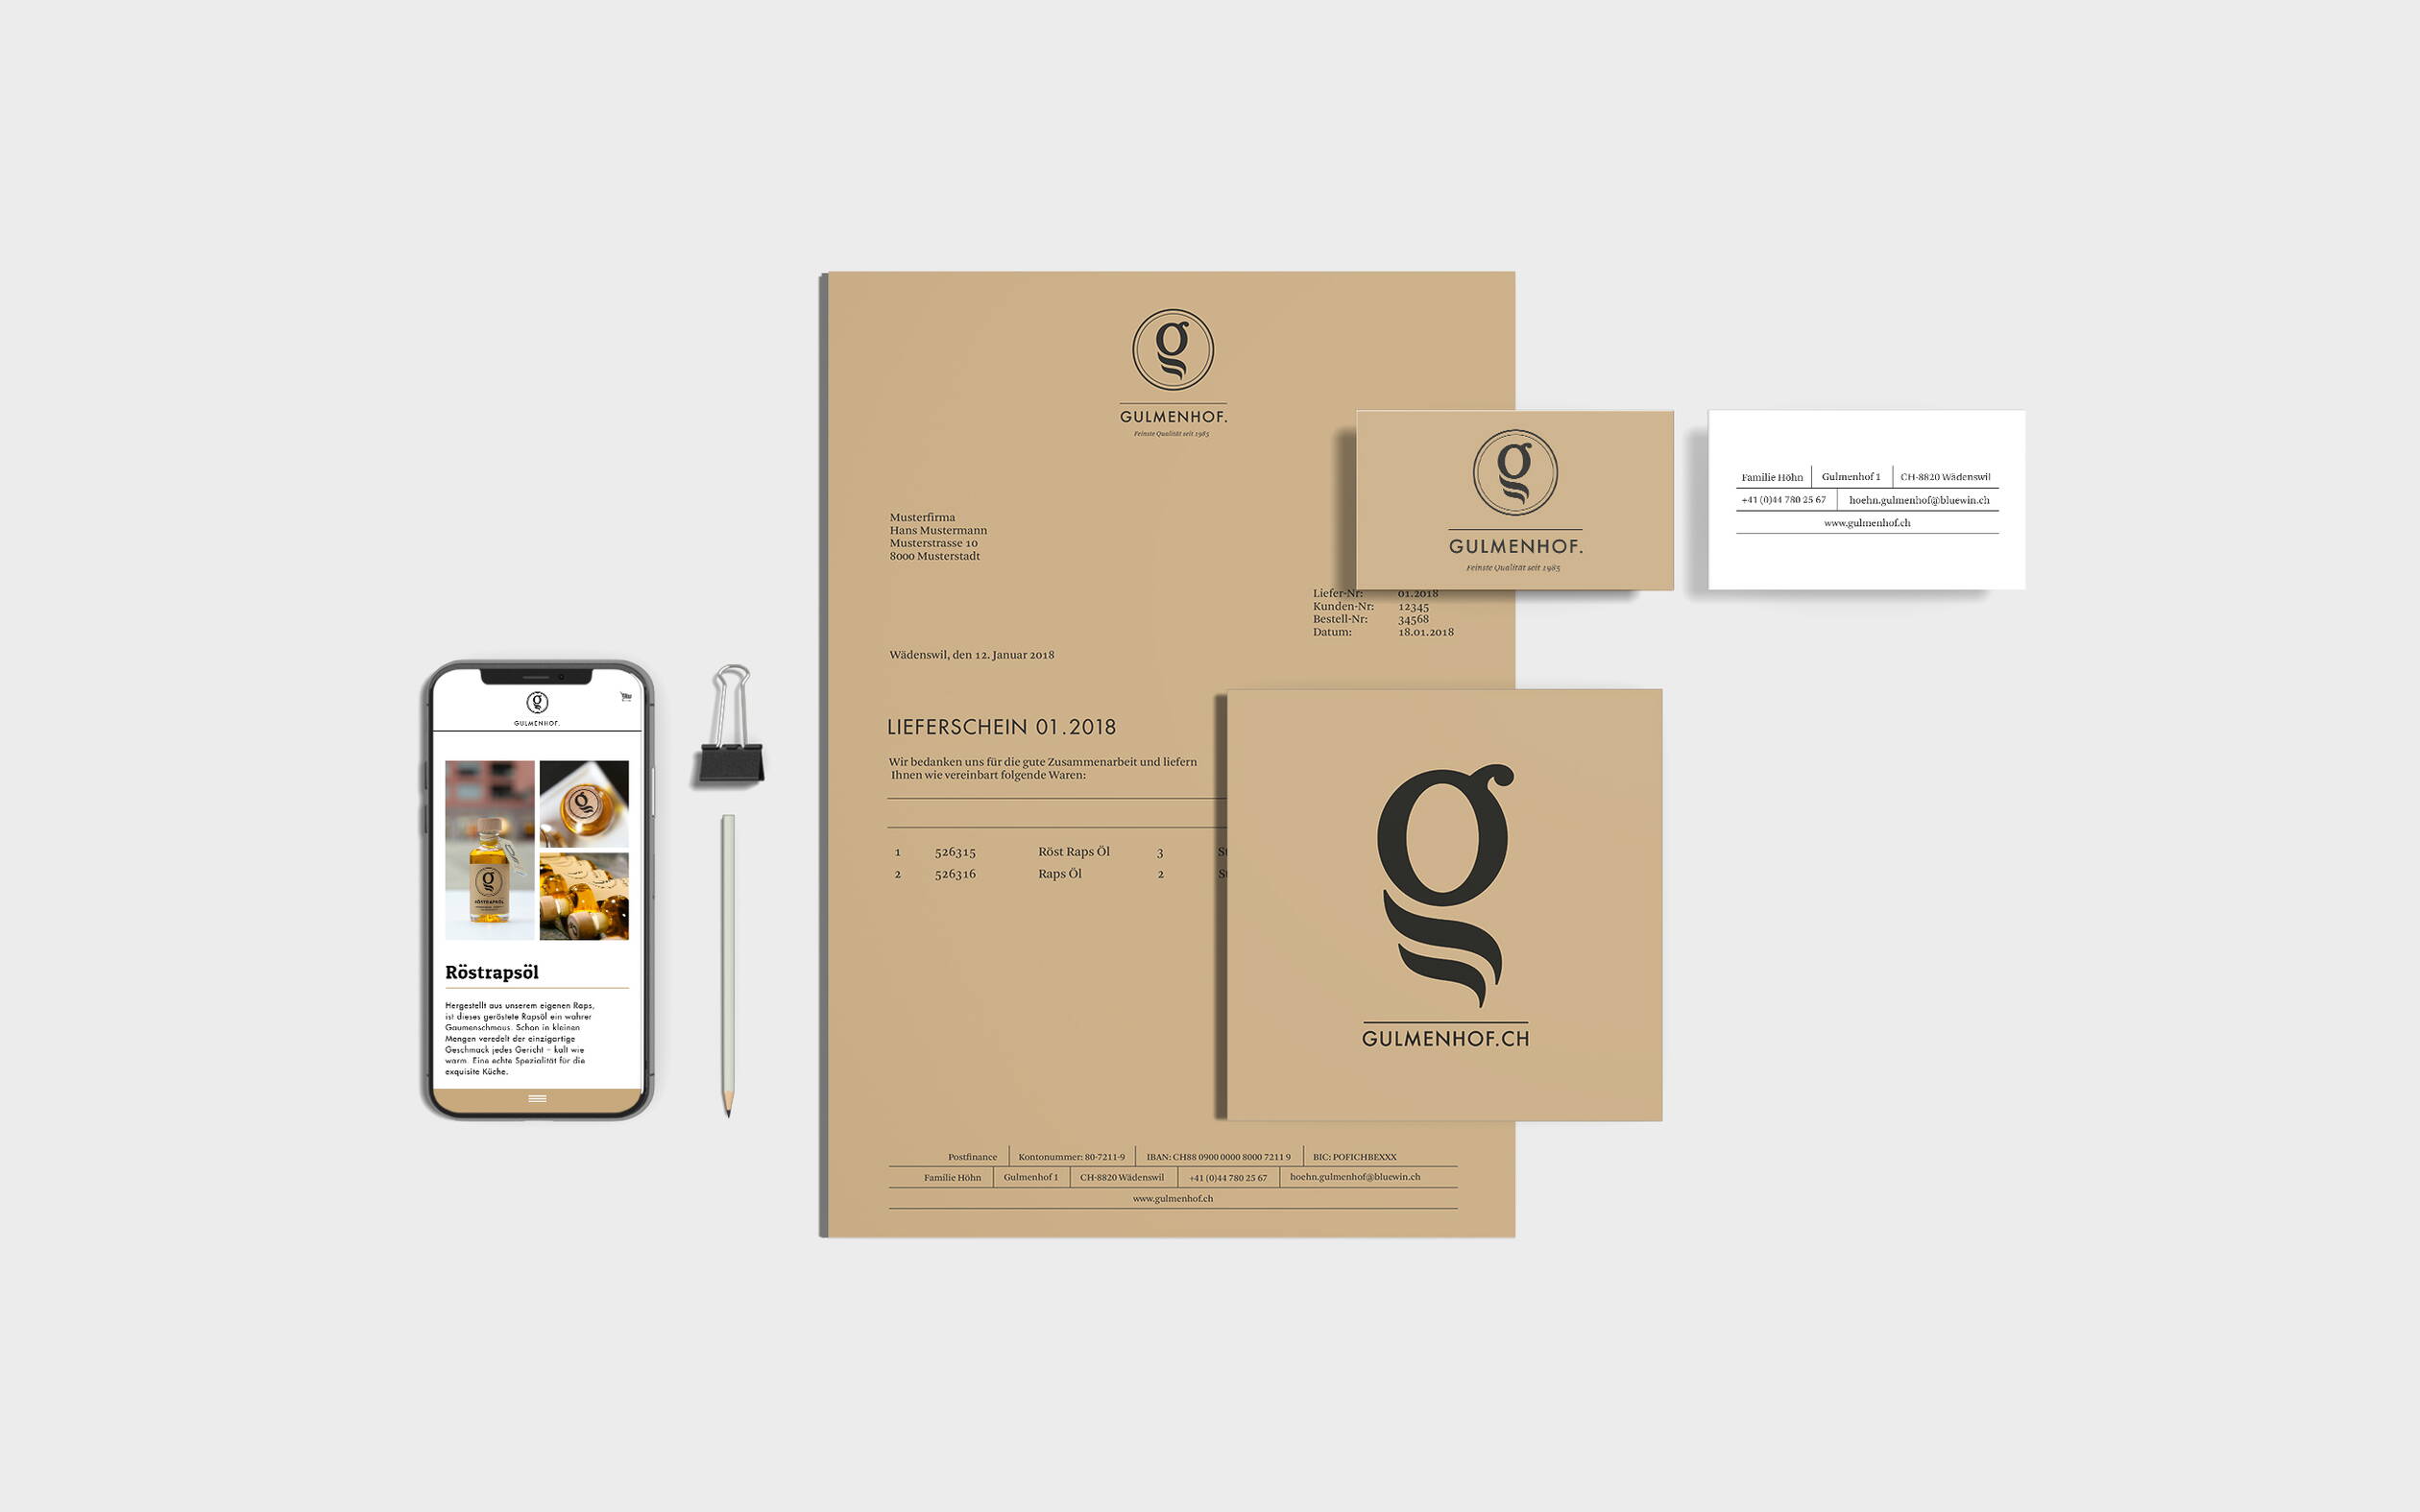 gabriela-martinelli-design_work_gulmenhof_corporate-design_website.jpg